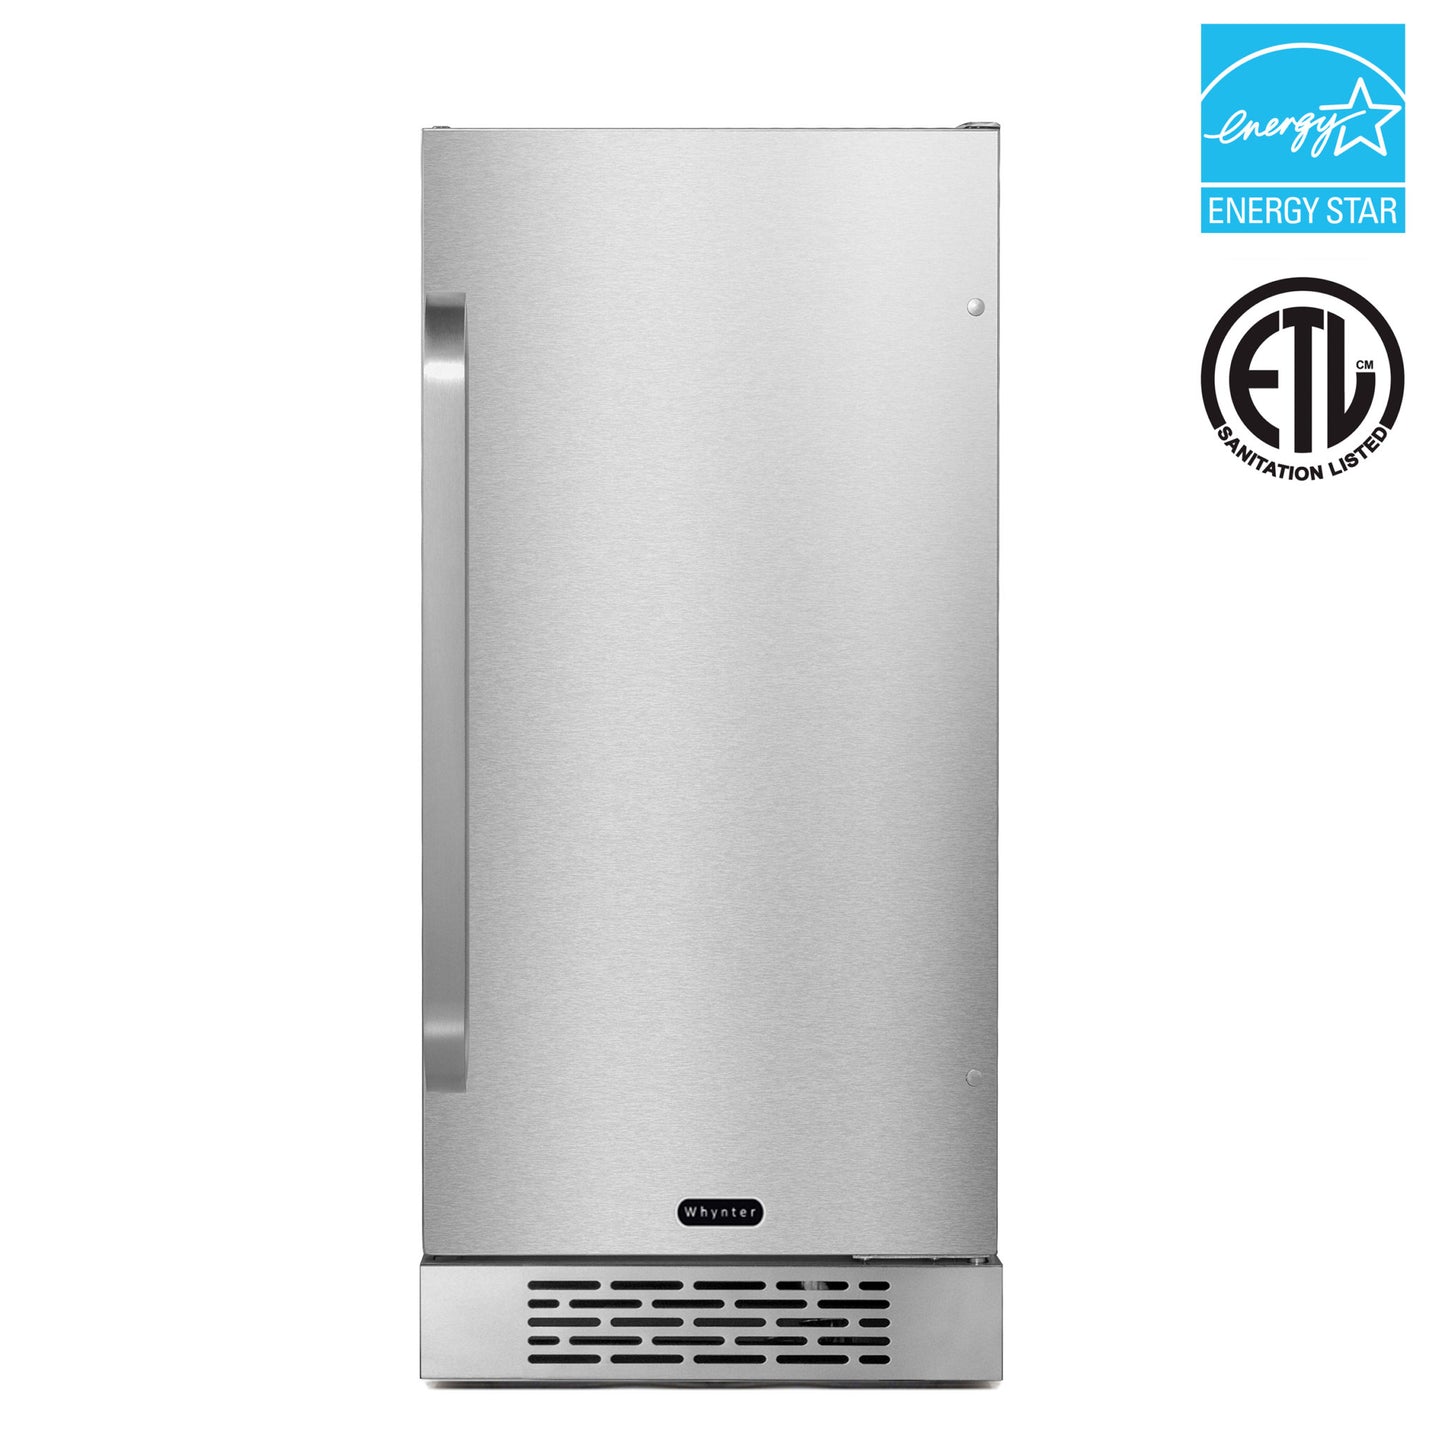 Whynter Energy Star Stainless Steel 3.0 cu. ft. Indoor/Outdoor Beverage Refrigerator - BOR-326FS